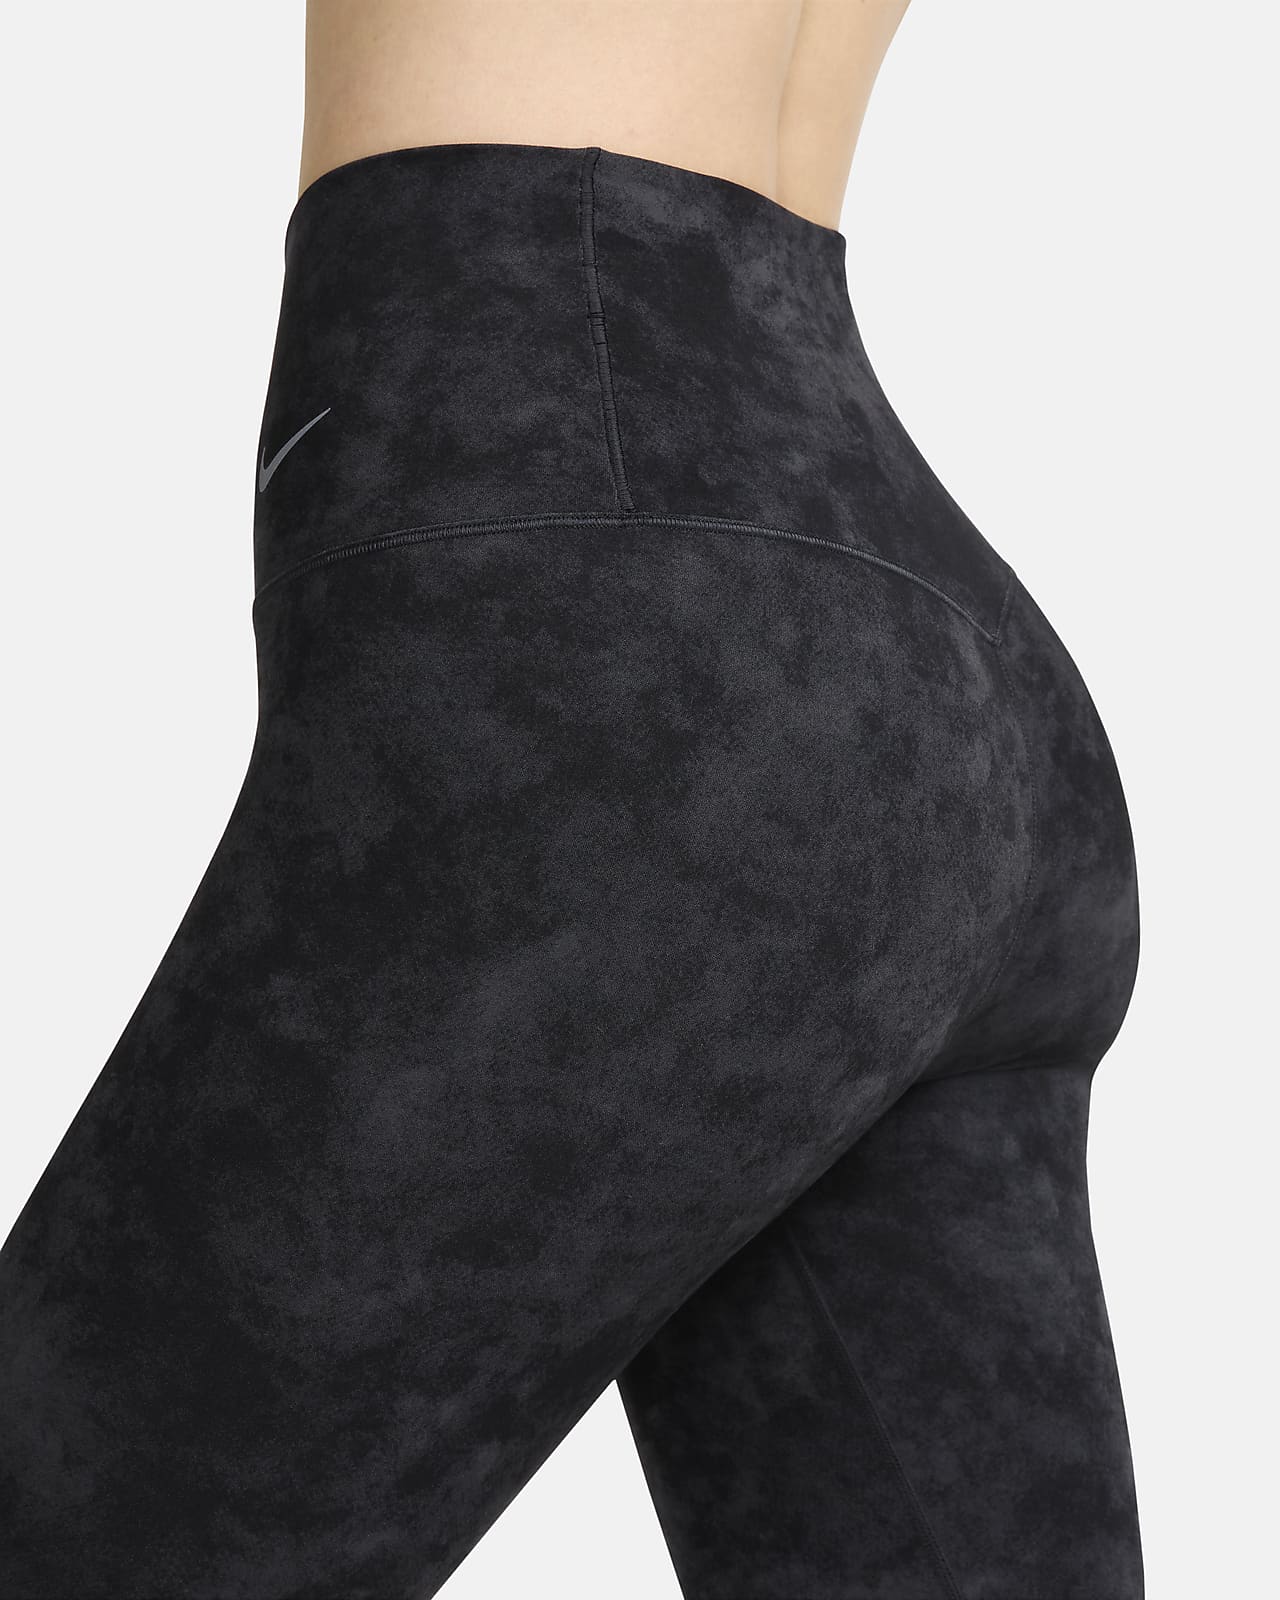 PINK - Victoria's Secret Leggings / Yoga Pants - $22 (63% Off